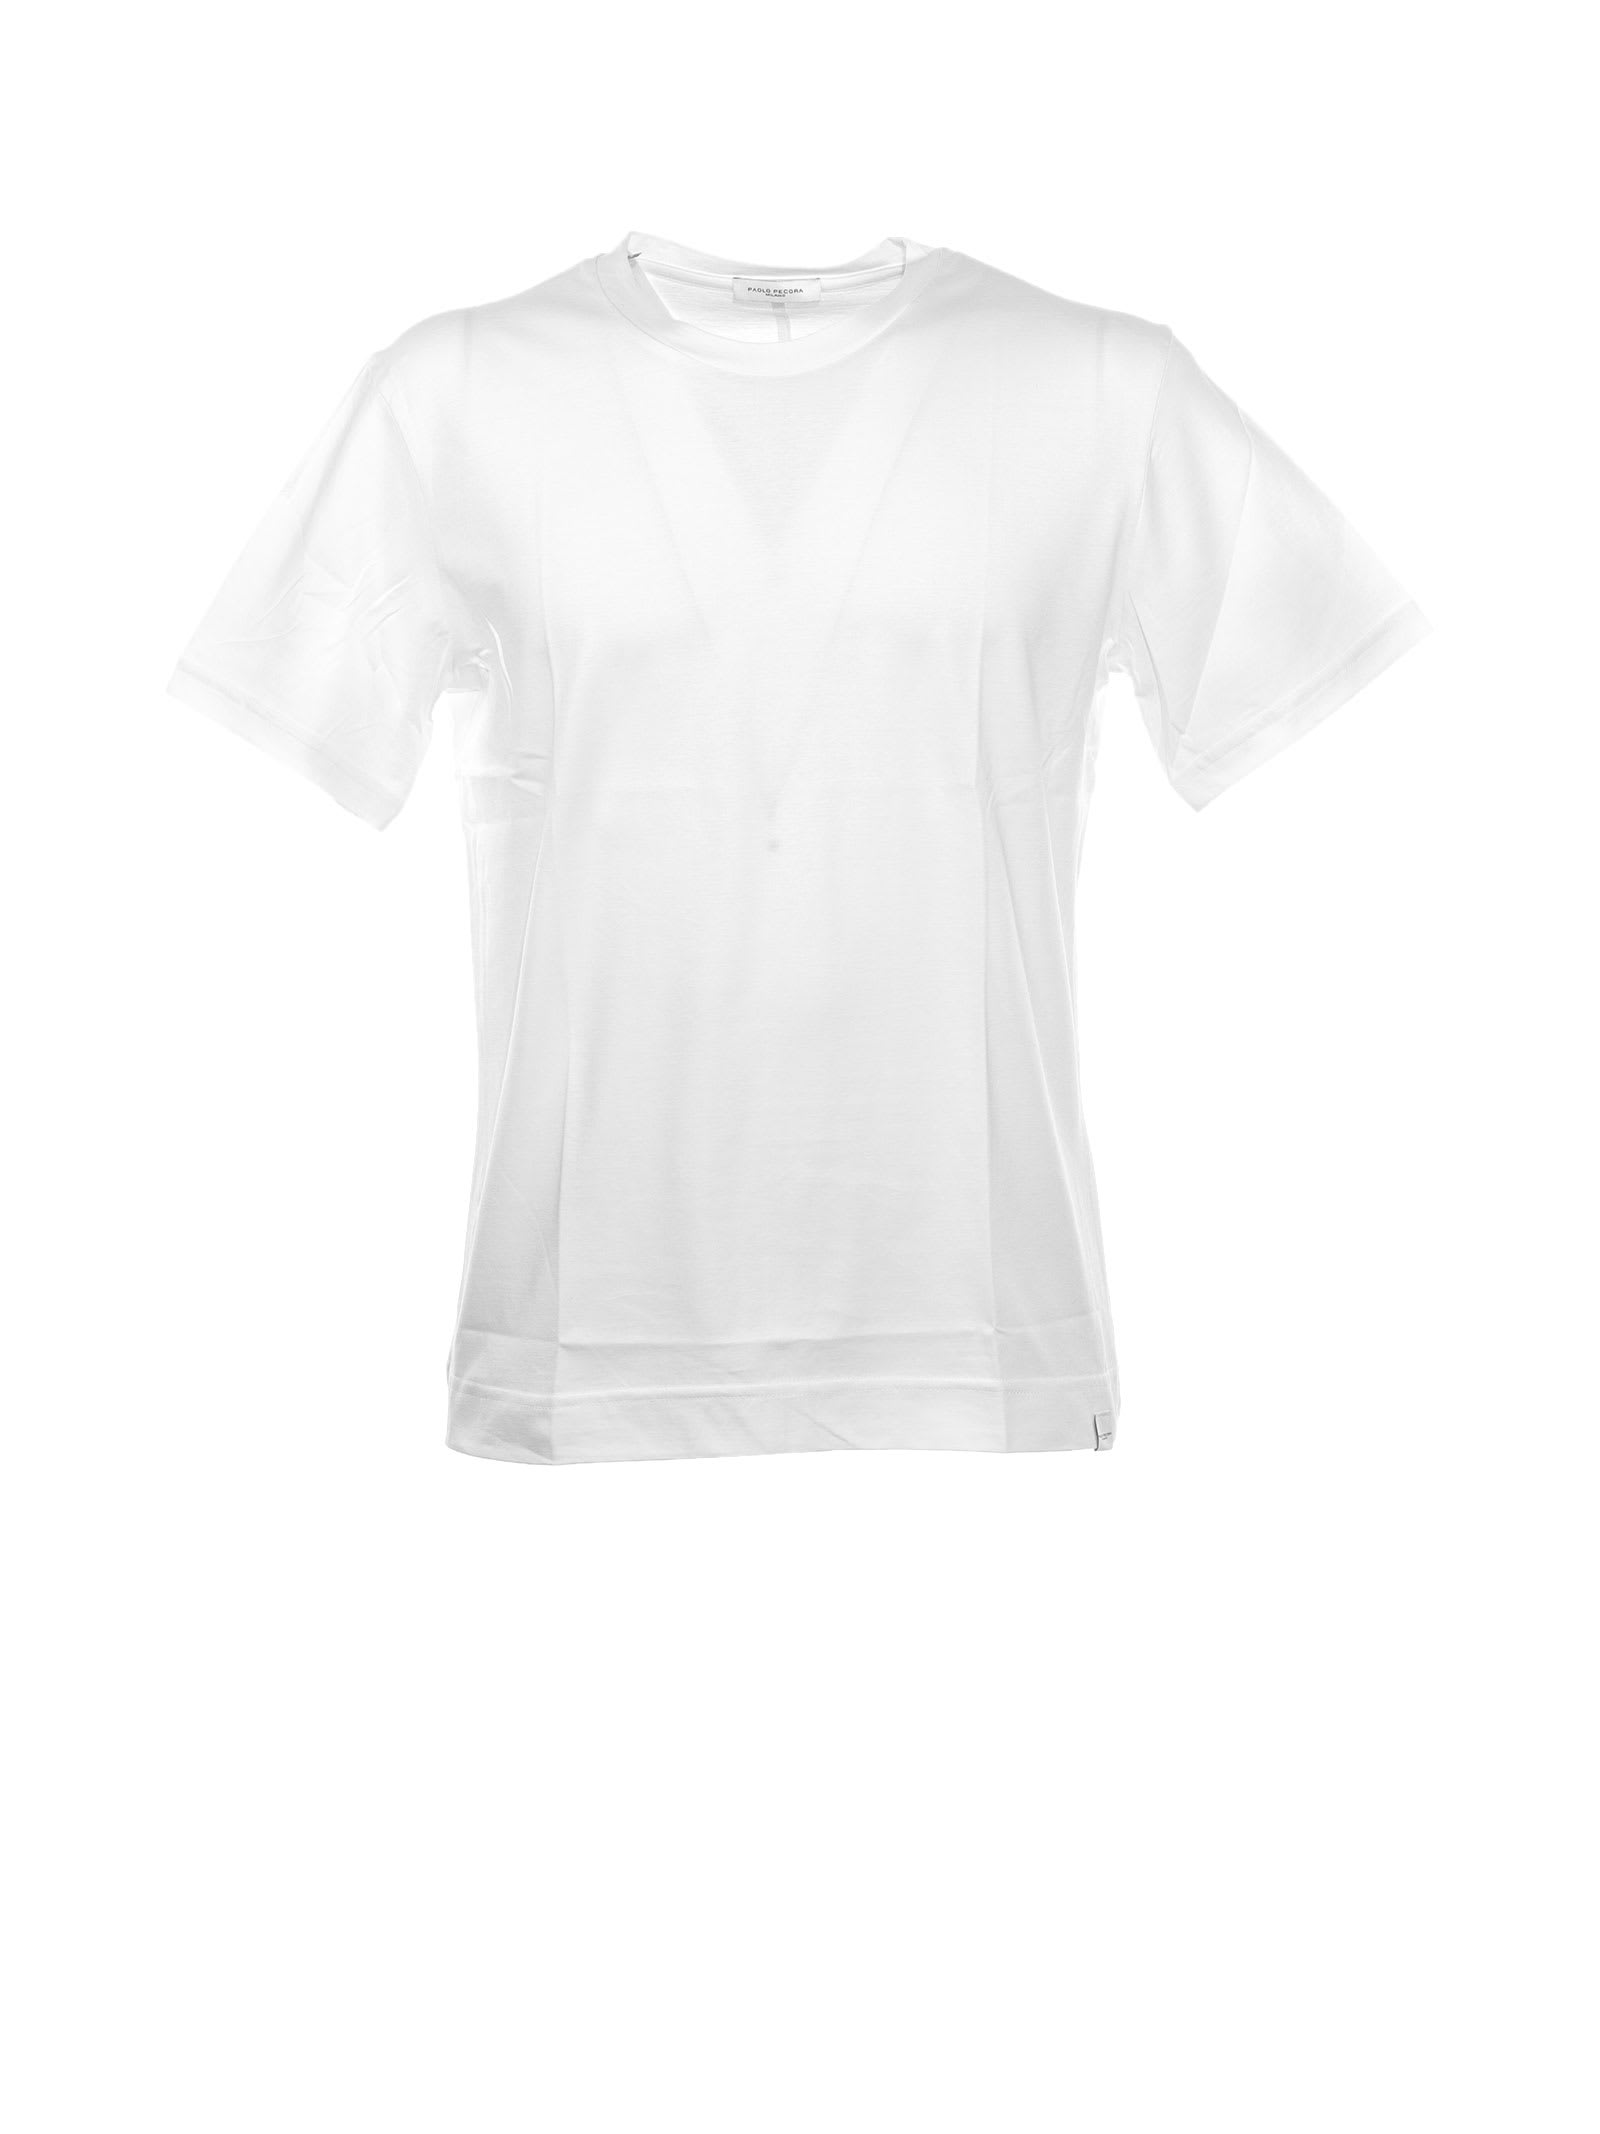 Paolo Pecora White Cotton T-shirt